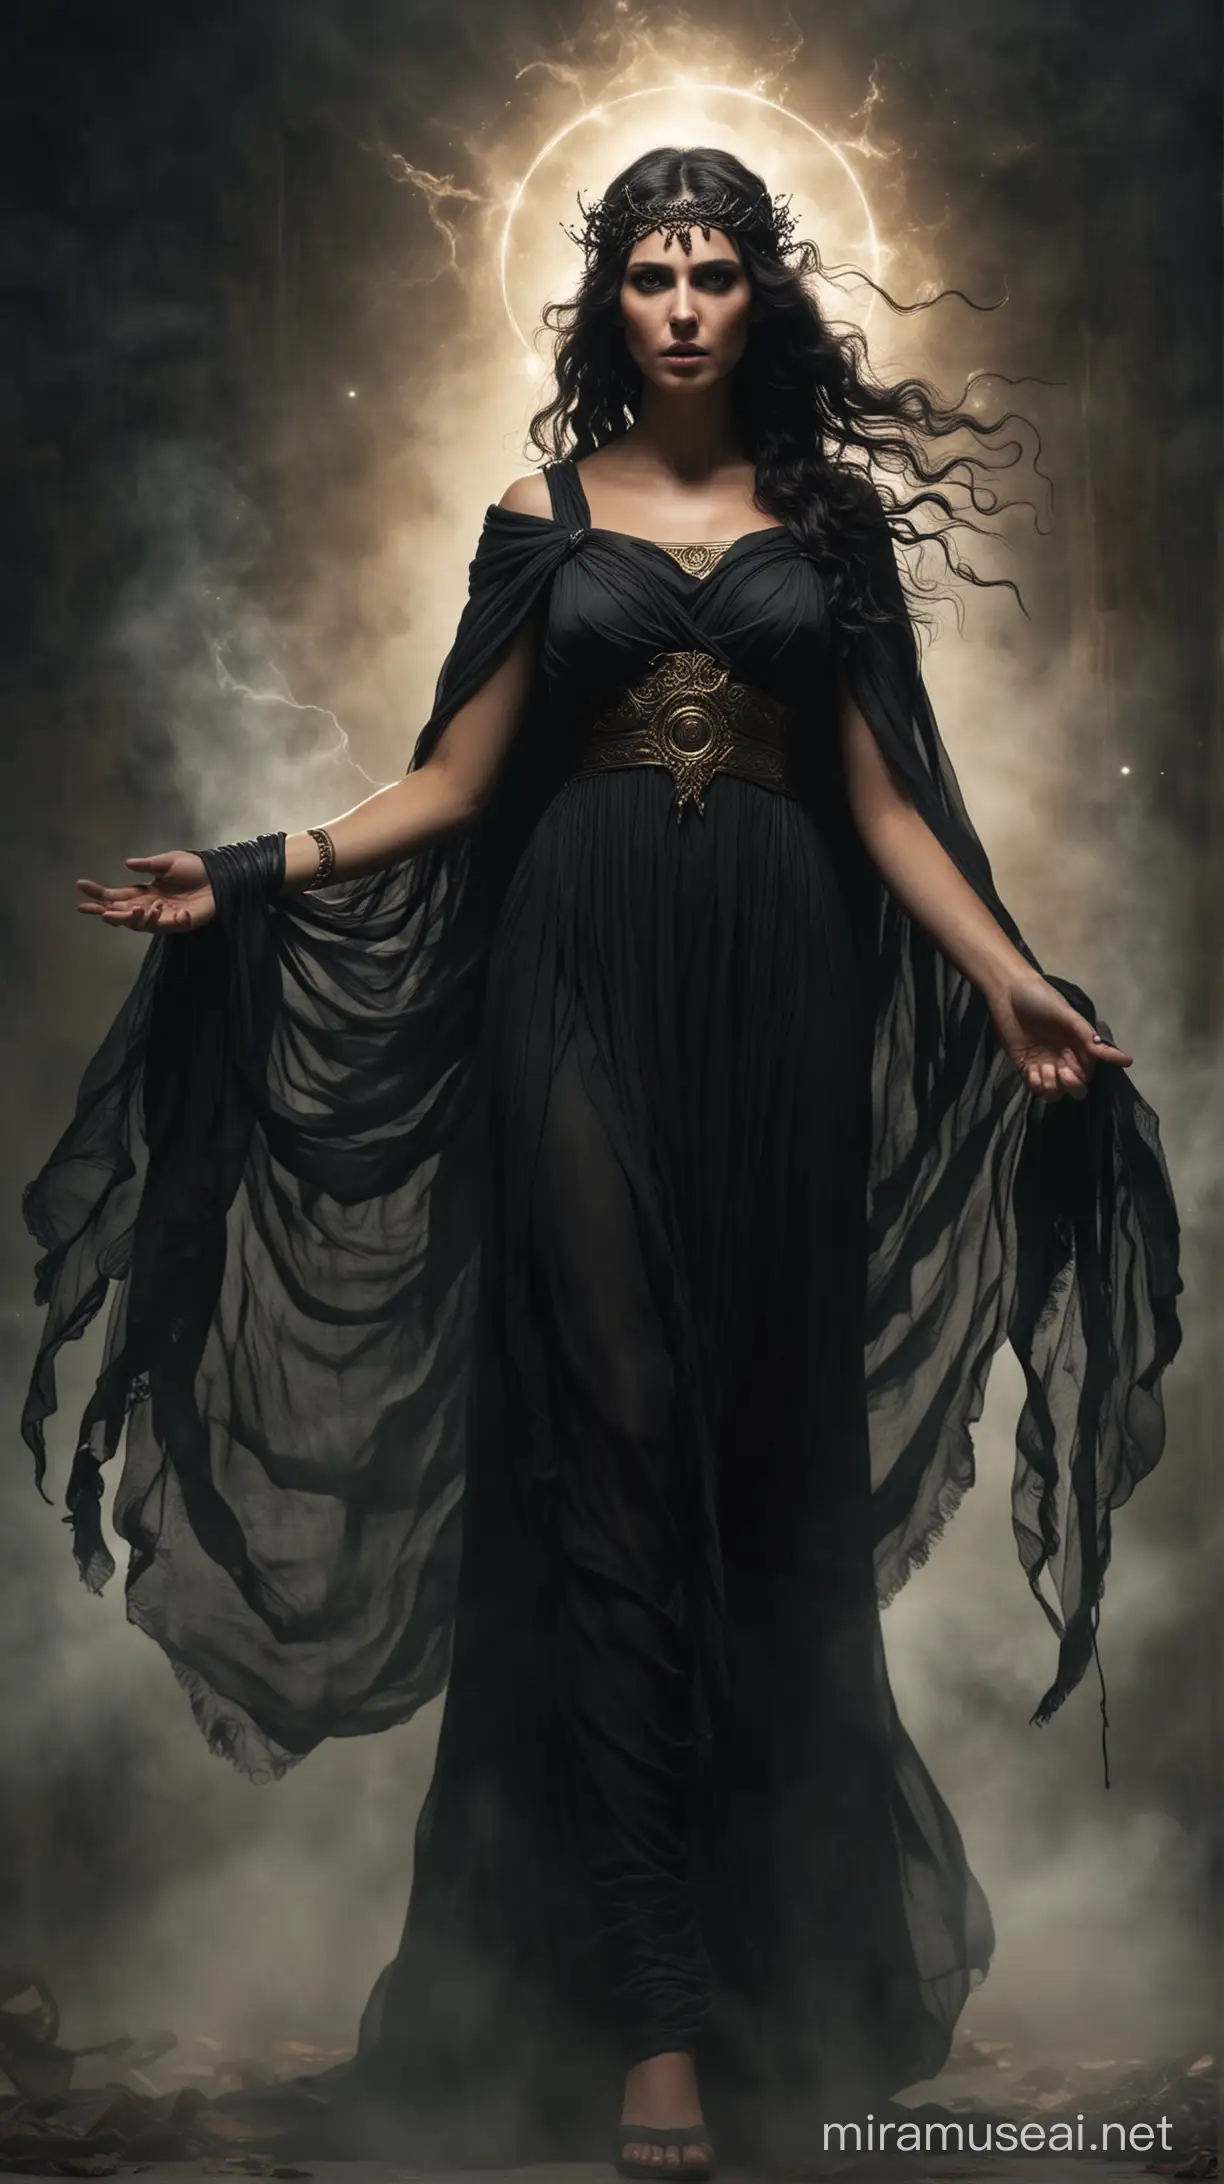 Medea de la mitologia griega, envuelta en una aura de magia negra